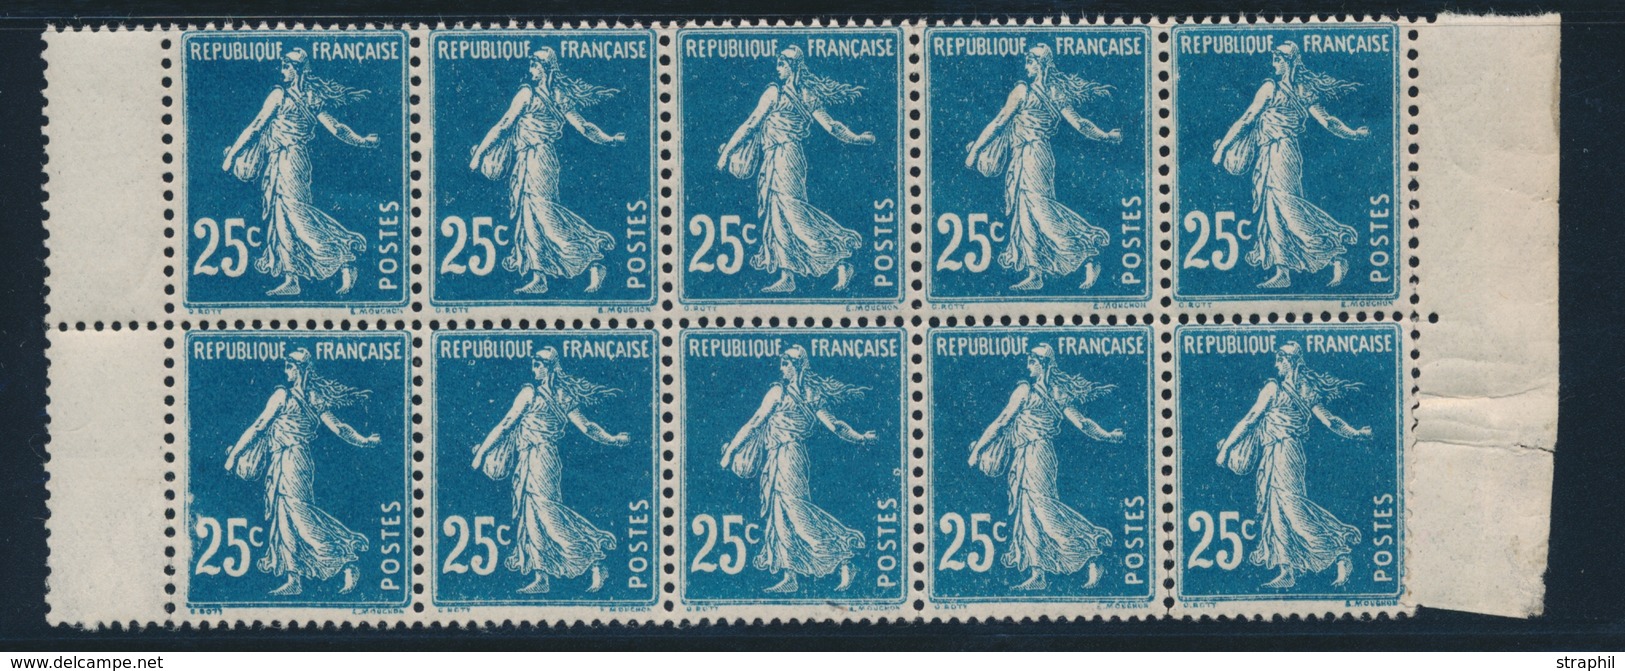 ** VARIETES - ** - N°140 Bleu Foncé - Bloc De 10 - Impression Recto Verso - Superbe Nuance - TF - TB - Unused Stamps